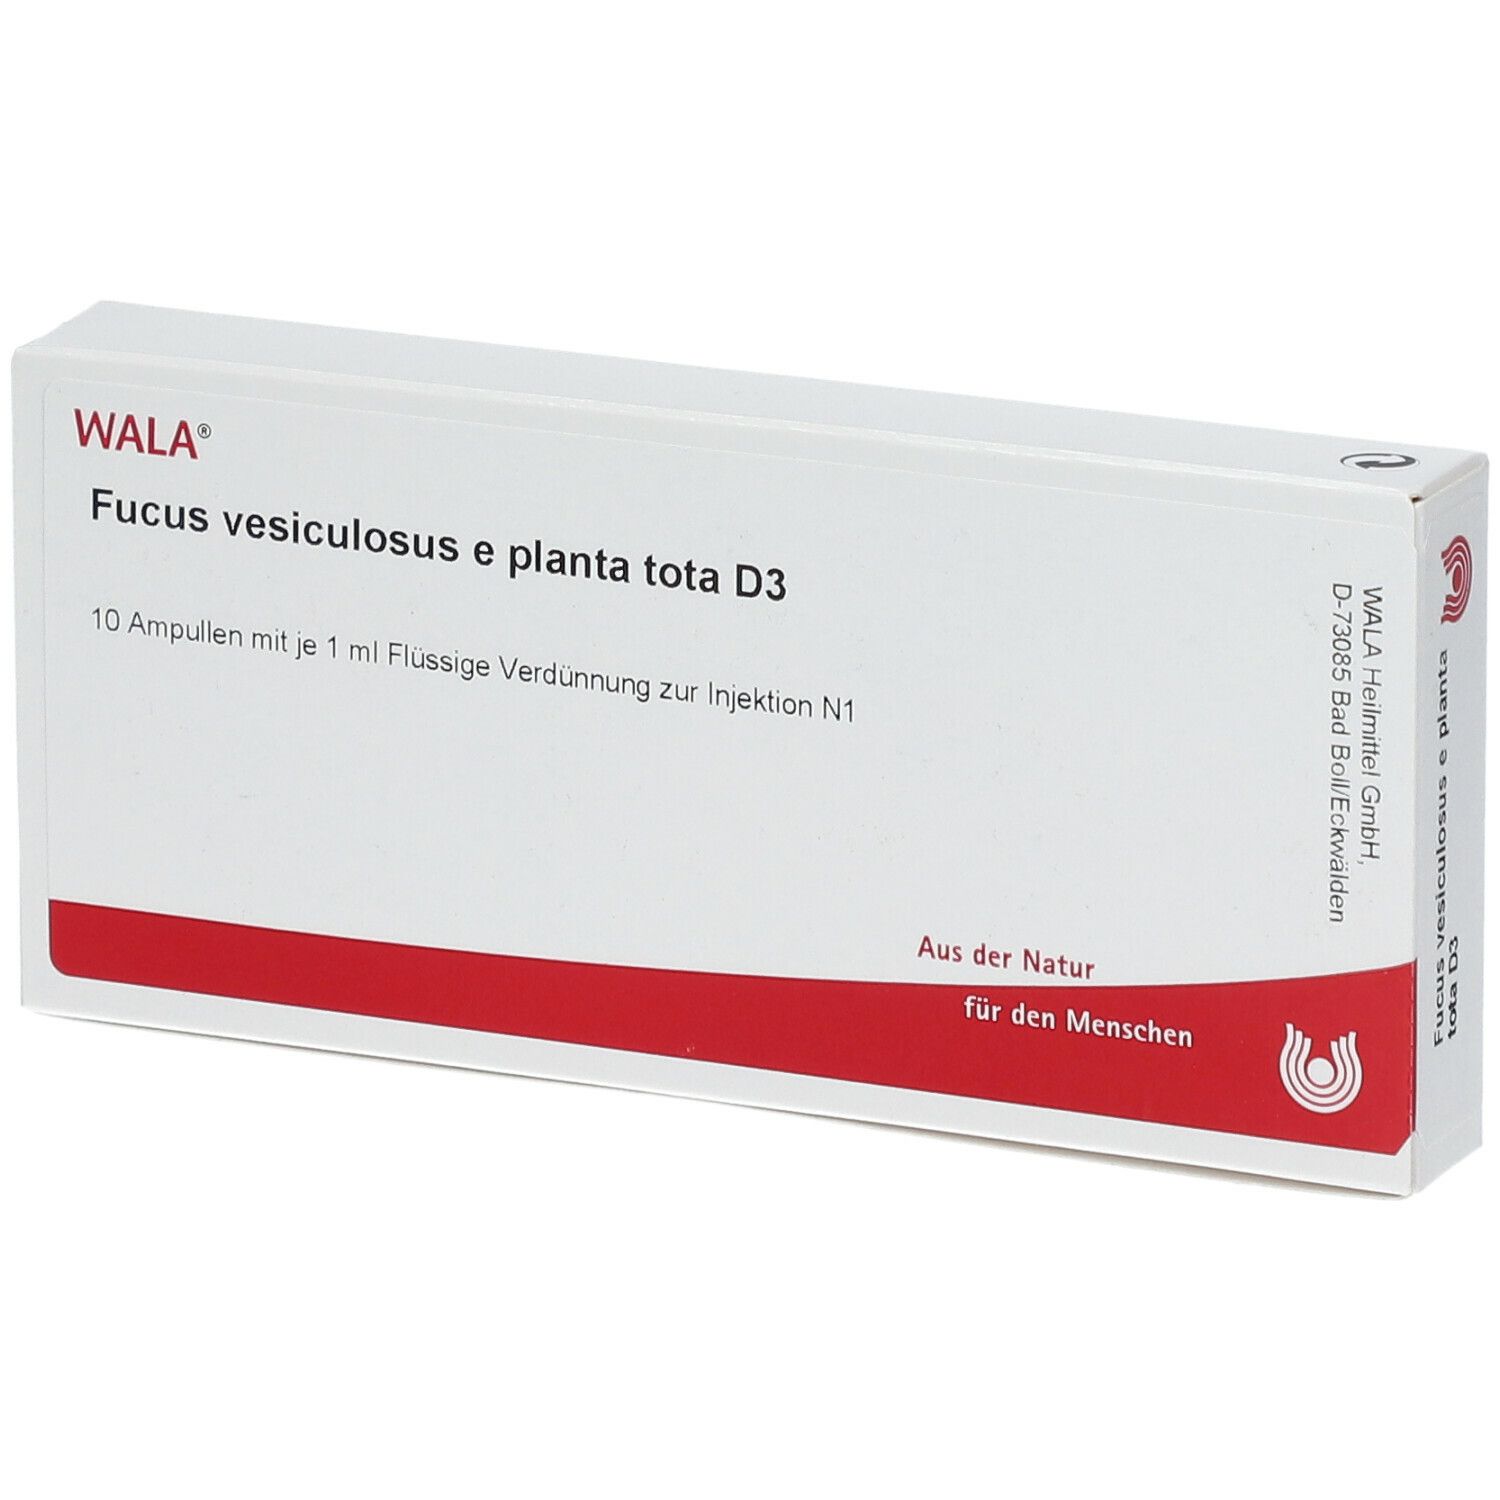 WALA® Fucus vesiculosus e planta tota D 3